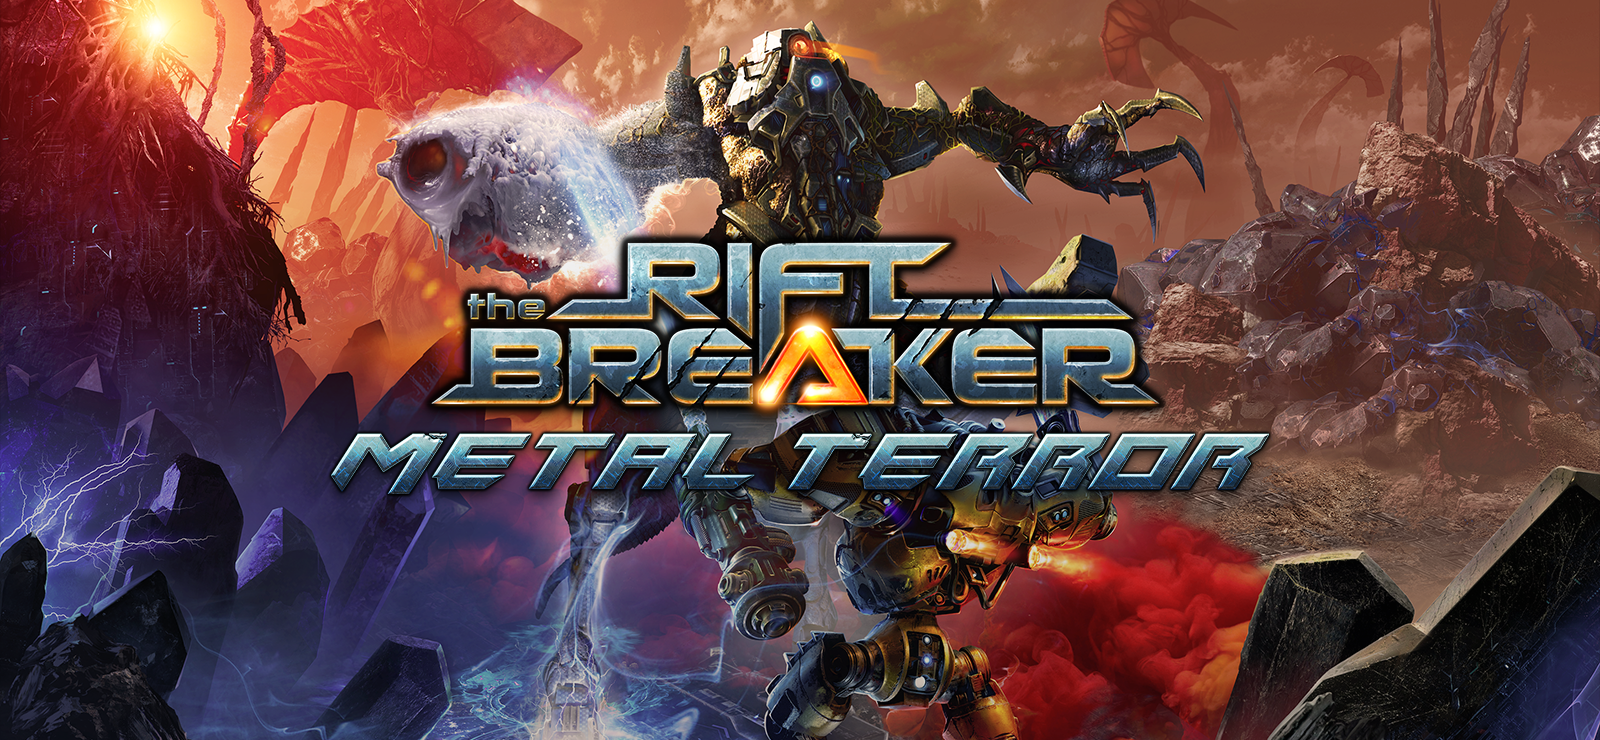 The Riftbreaker: Metal Terror